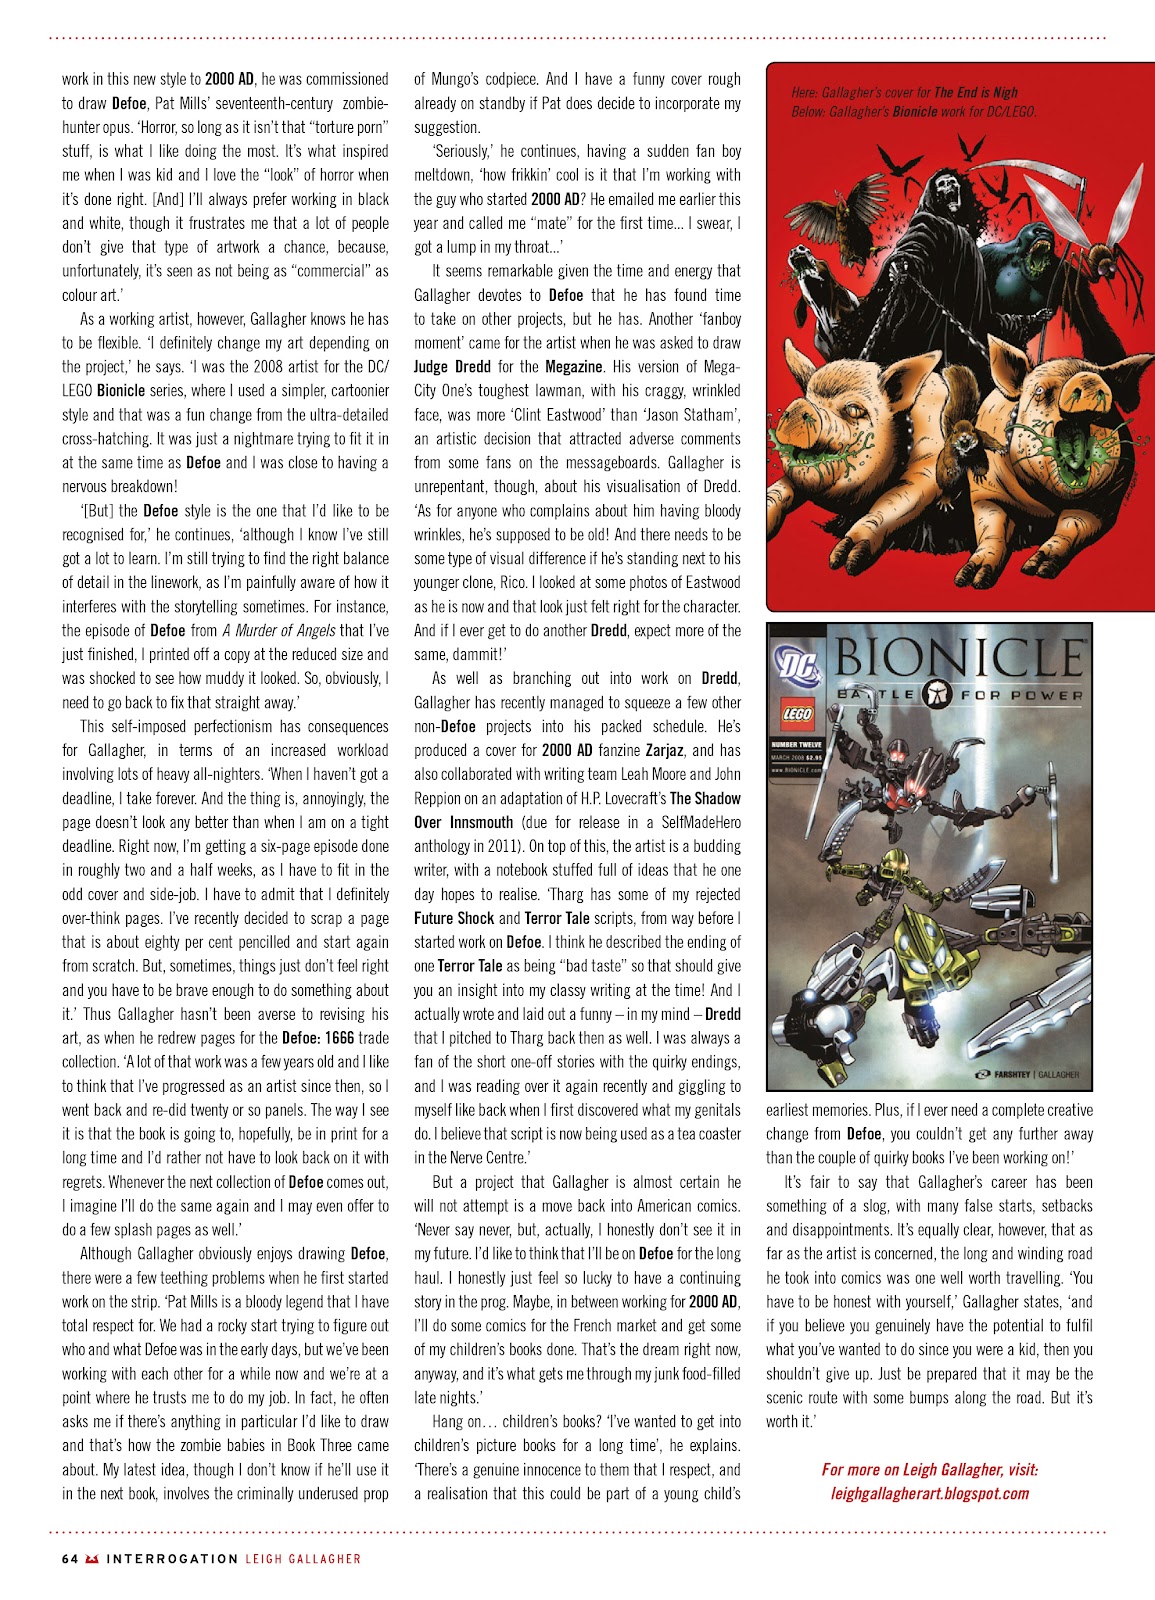 Judge Dredd Megazine (Vol. 5) issue 413 - Page 130